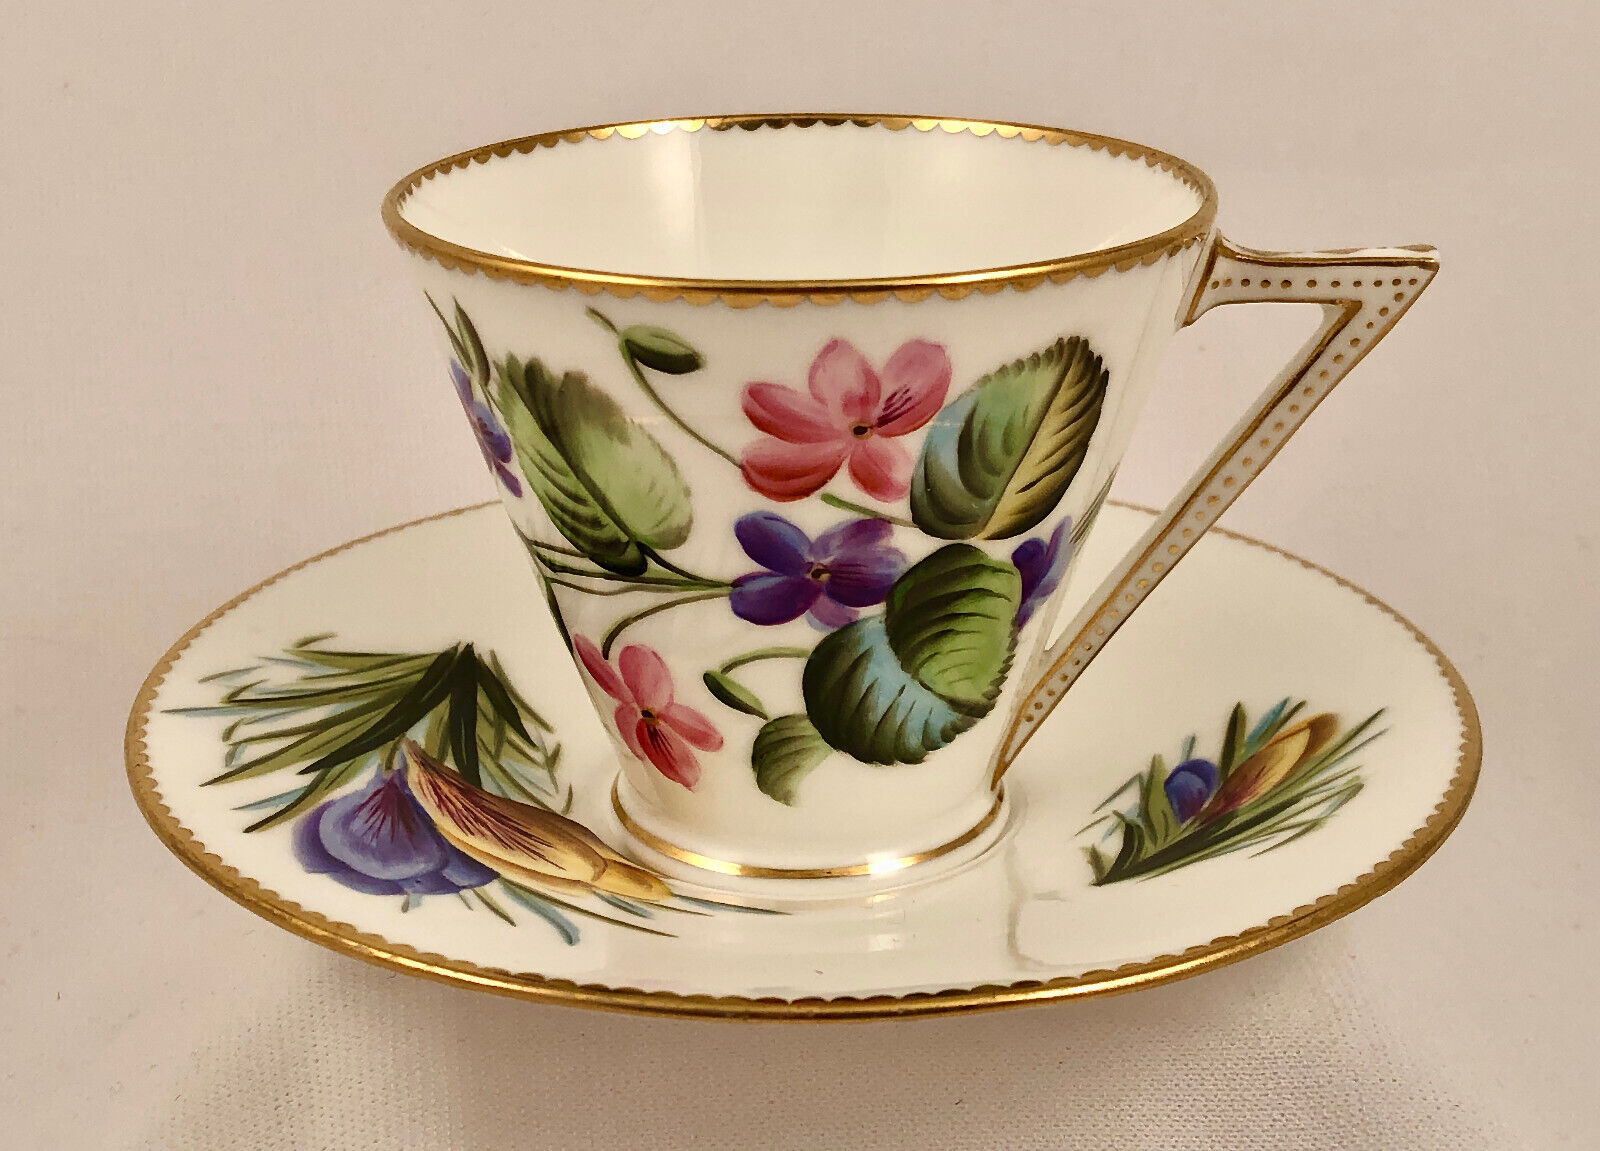 Antique George Jones Tea Cup & Saucer, Floral, Hand Painted, 1870s